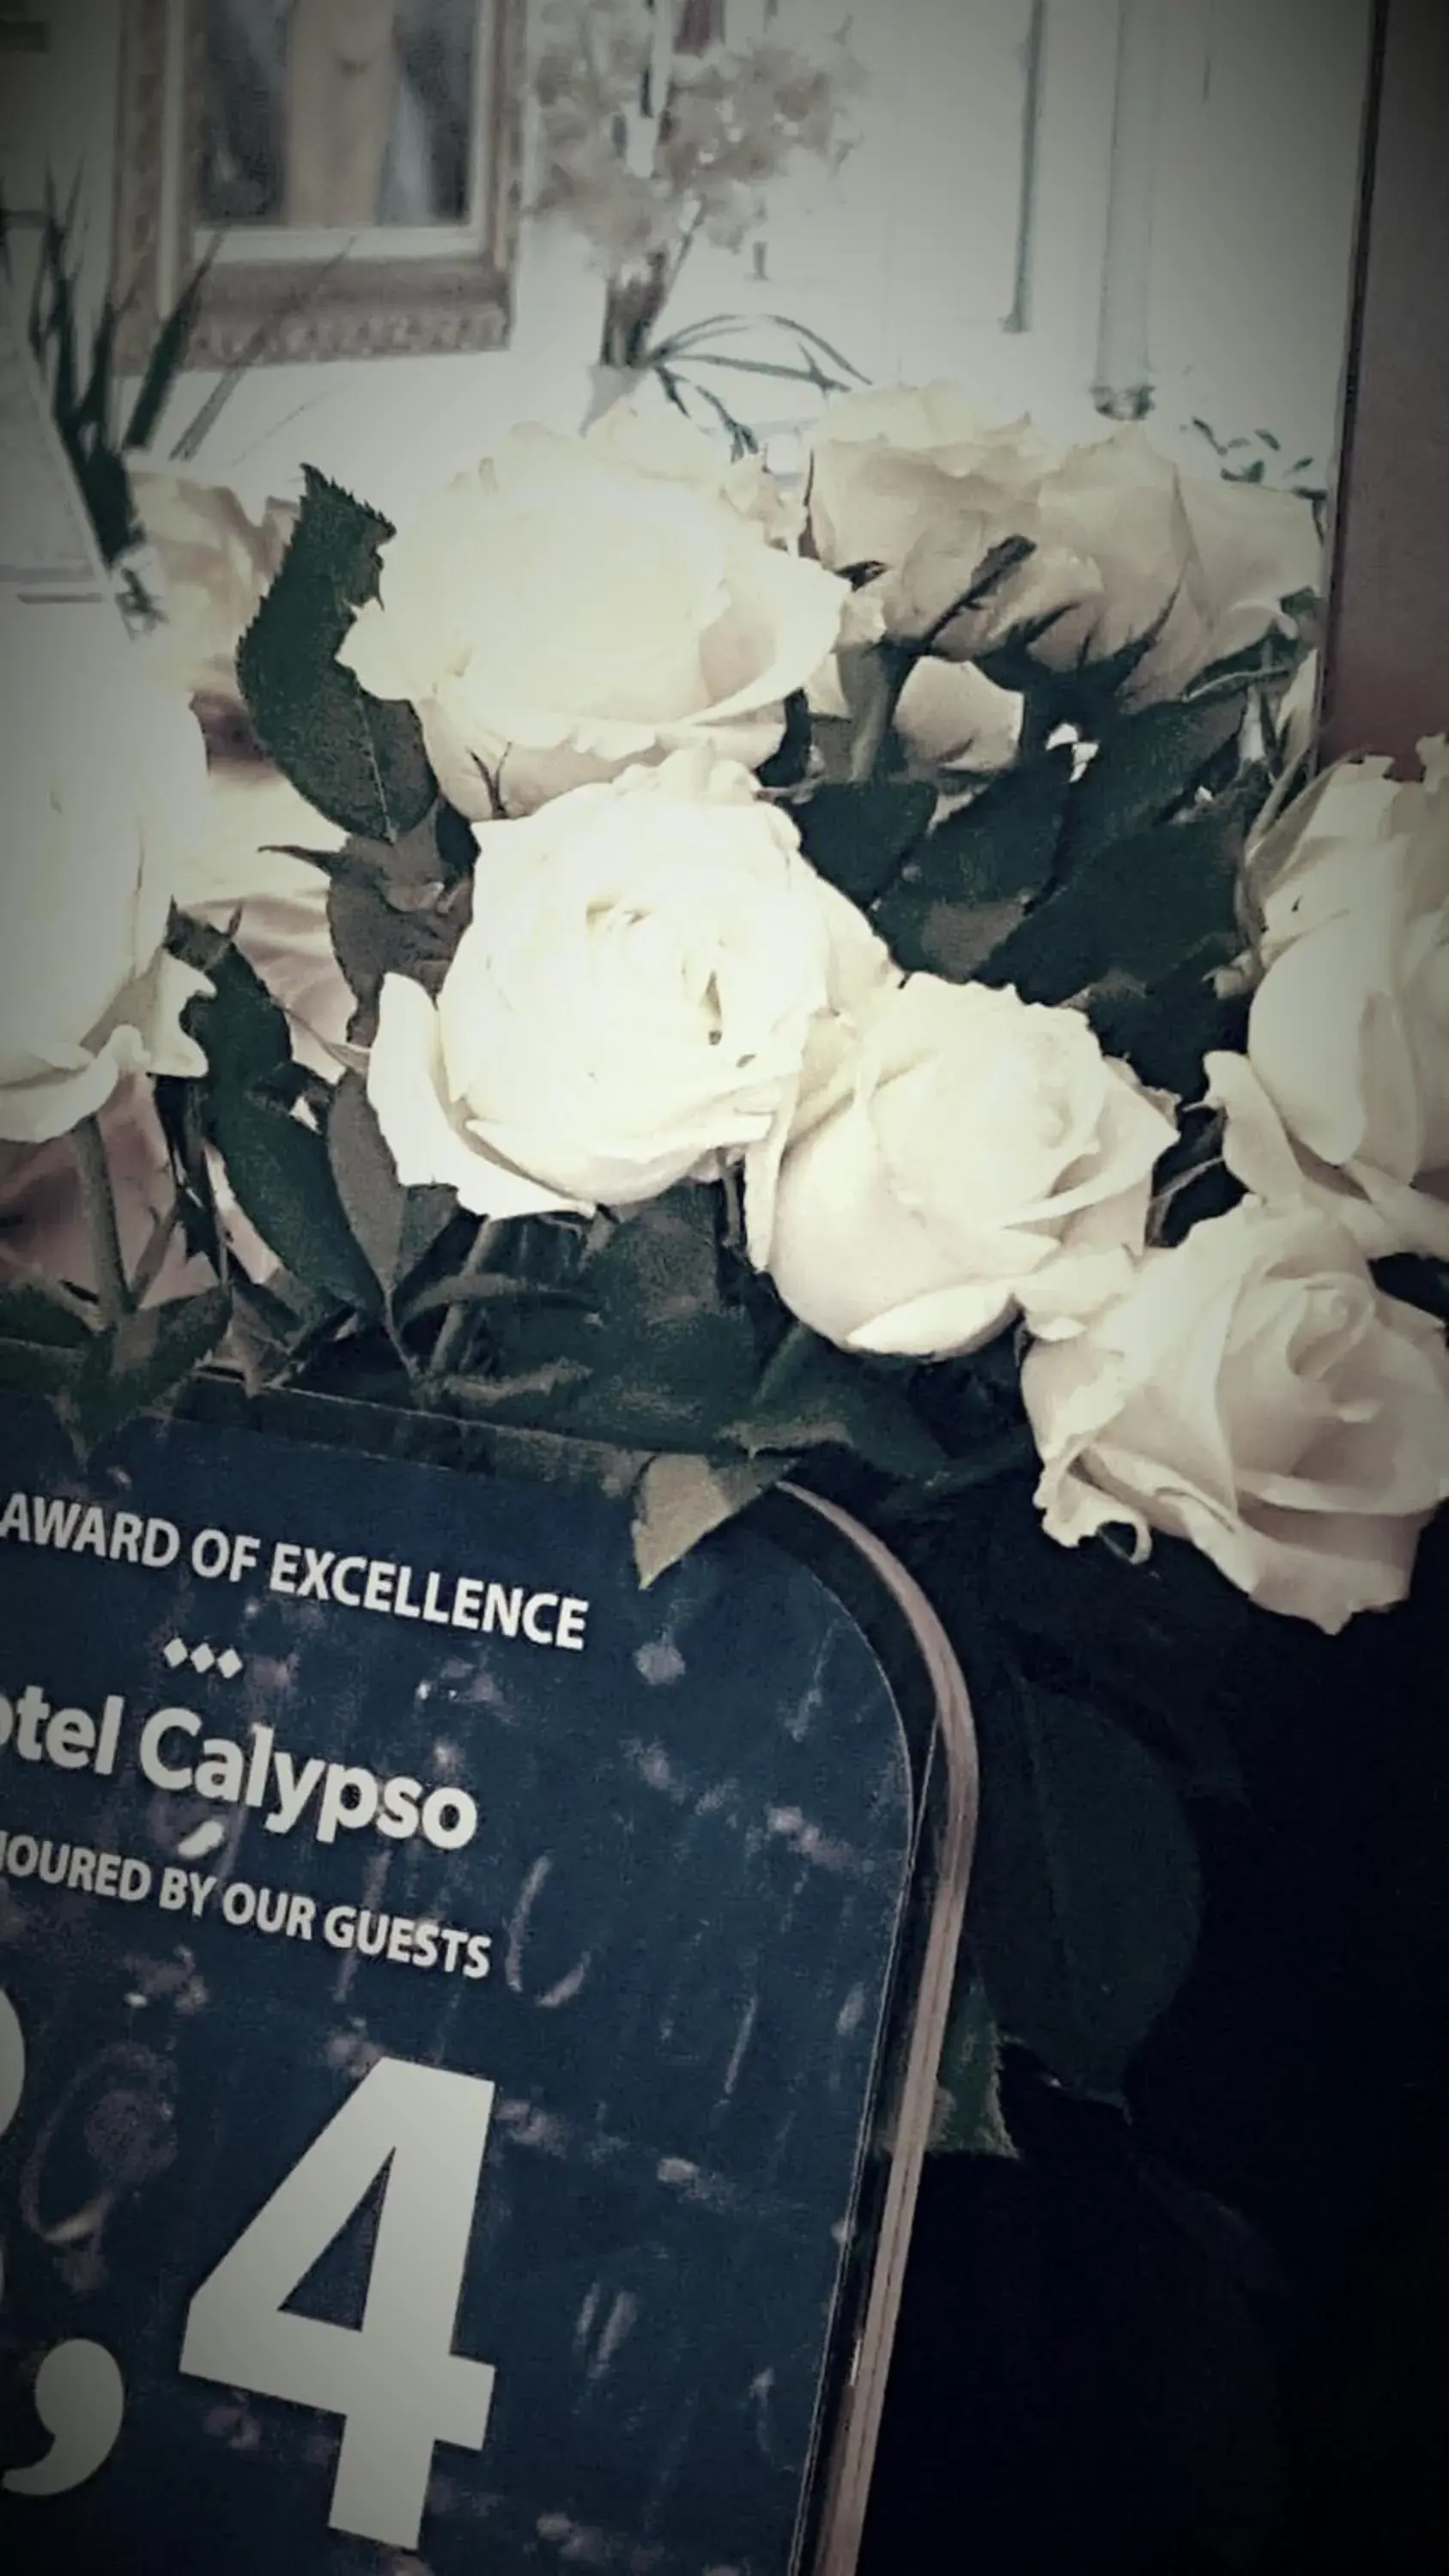 Certificate/Award in Hotel Calypso